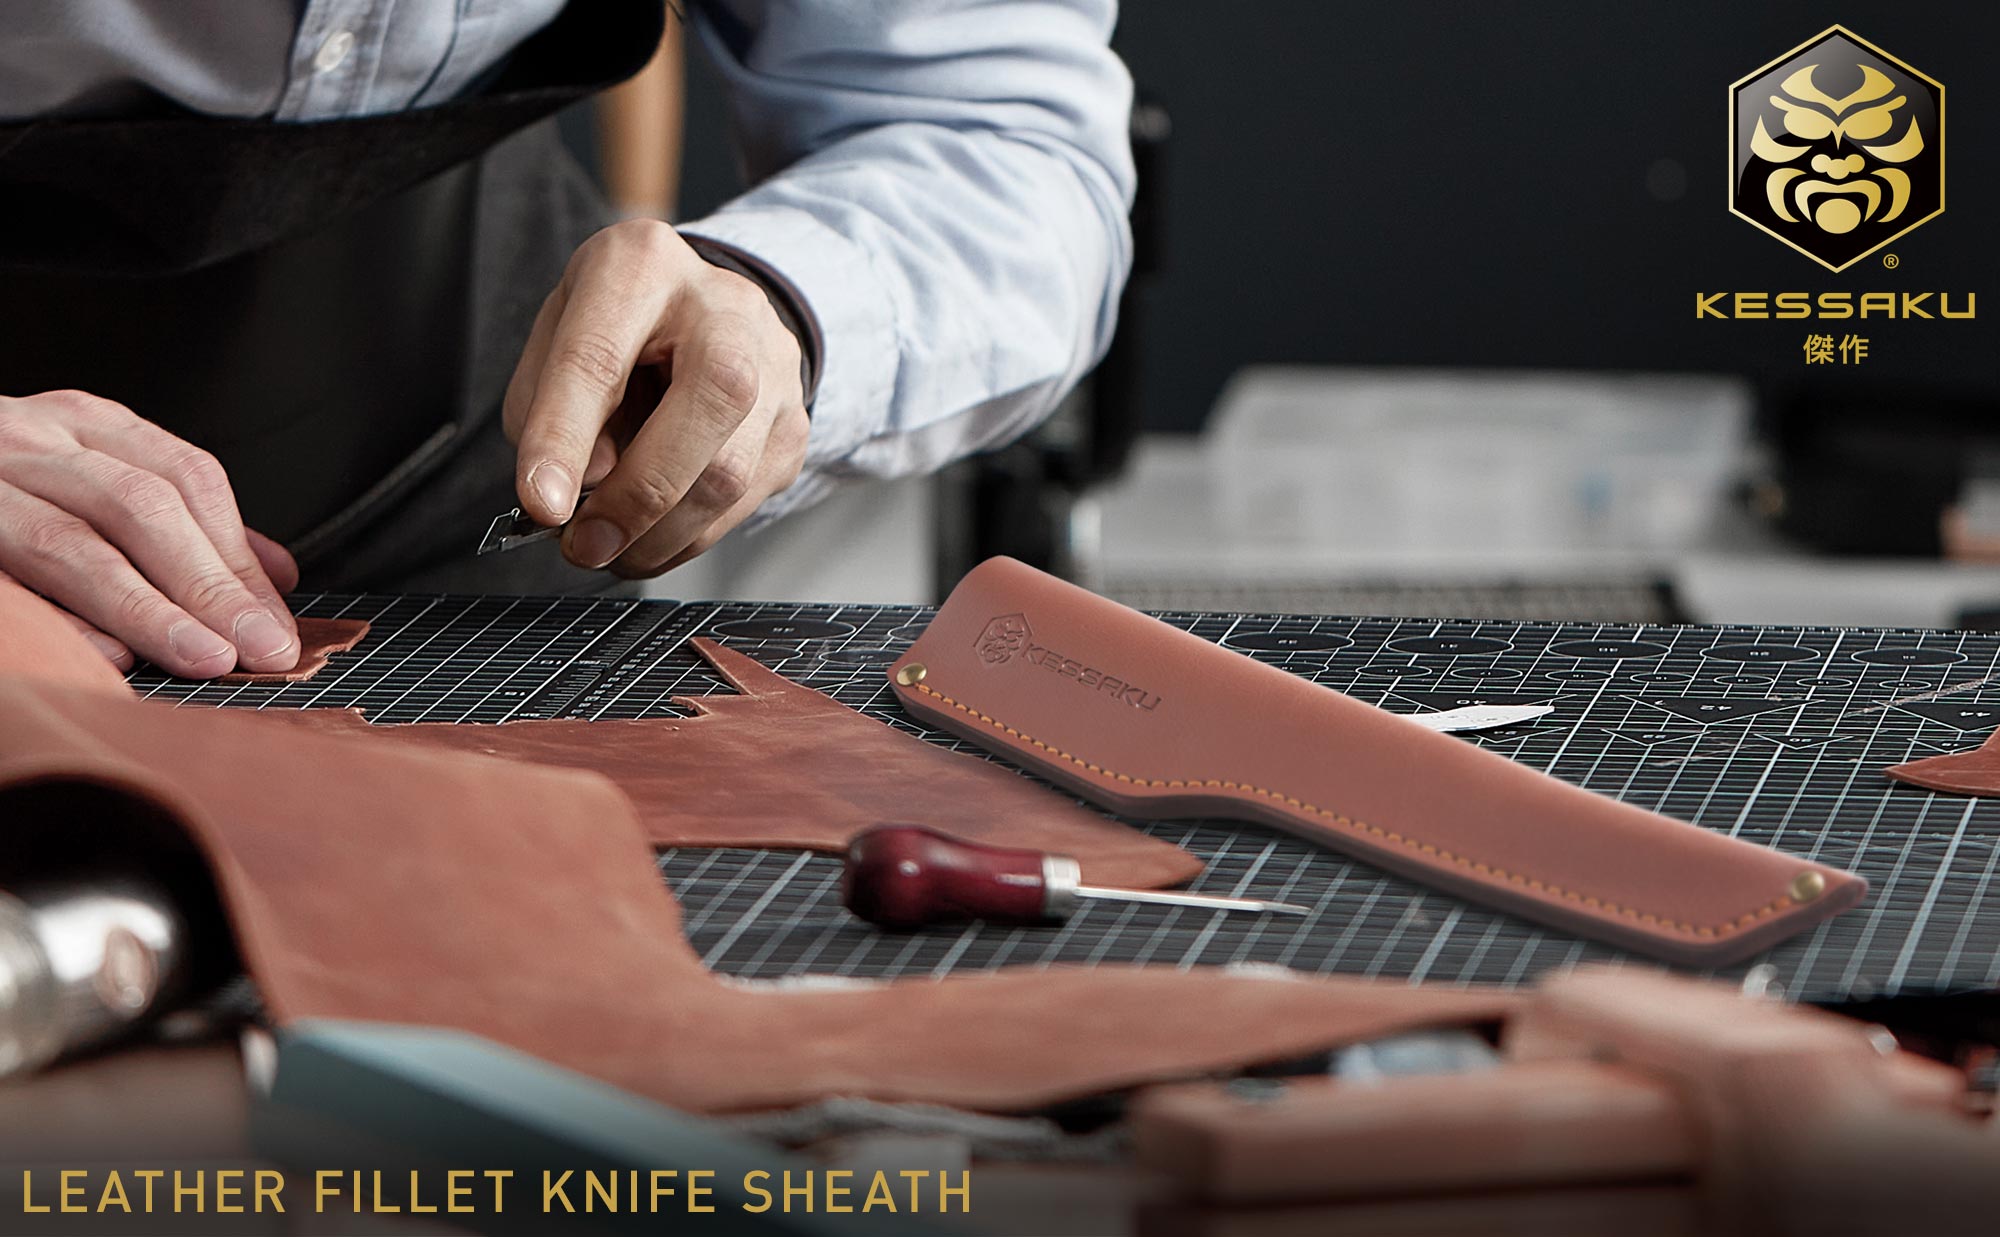 A leather maker creating the Kessaku Leather Fillet Knife Sheath with Belt Loop